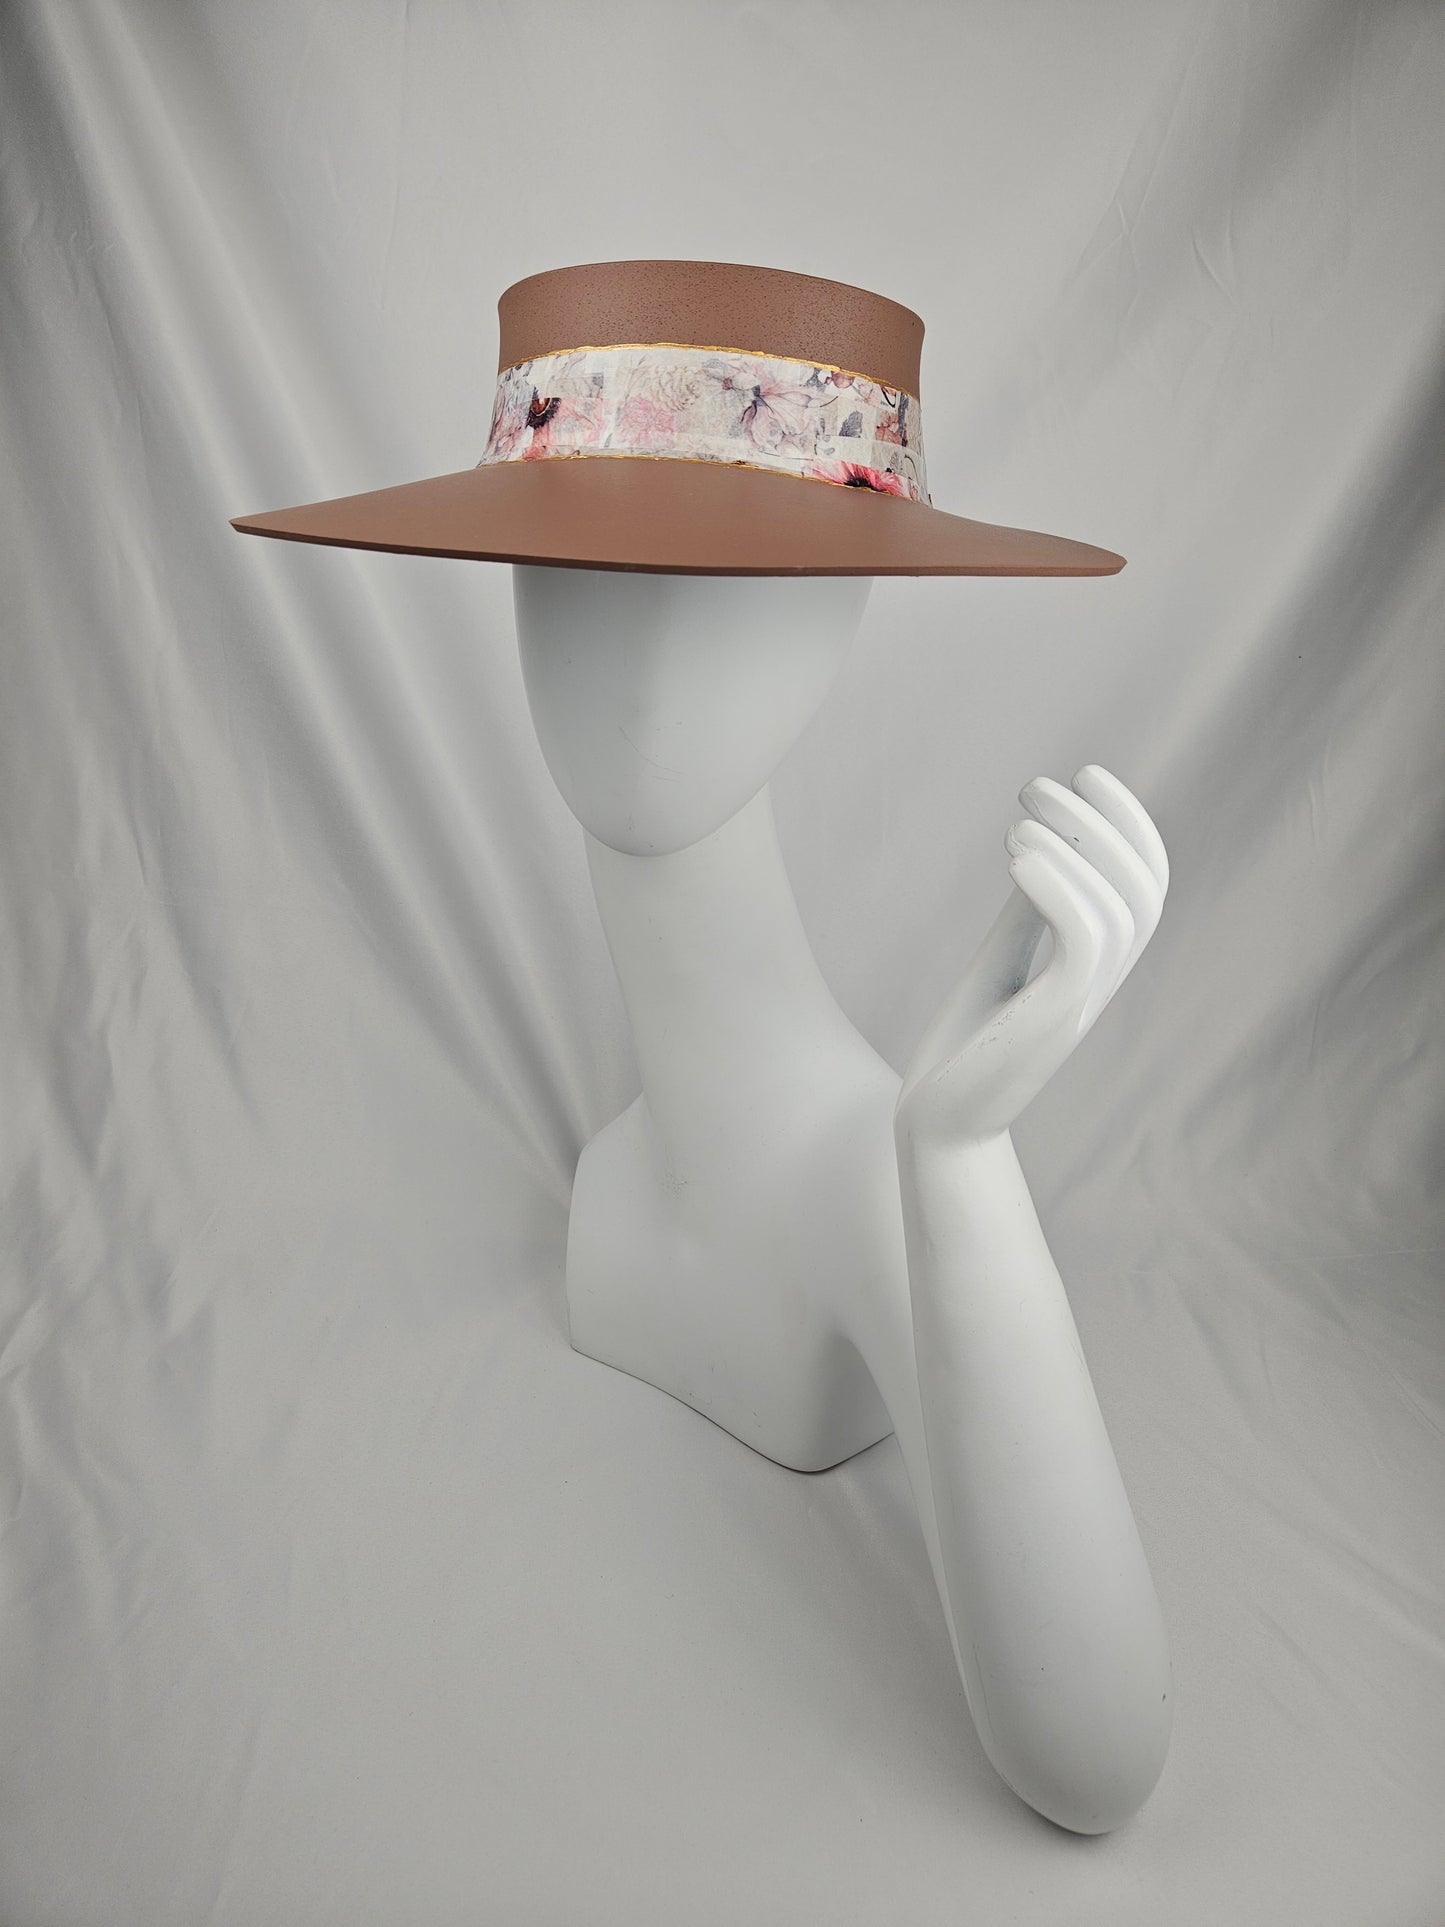 Caramel Brown Audrey Sun Visor Hat with Elegant Pink Floral Band: UV Resistant, Walks, Brunch, Tea, Golf, Wedding, Church, No Headache, Easter, Pool, Beach, Big Brim